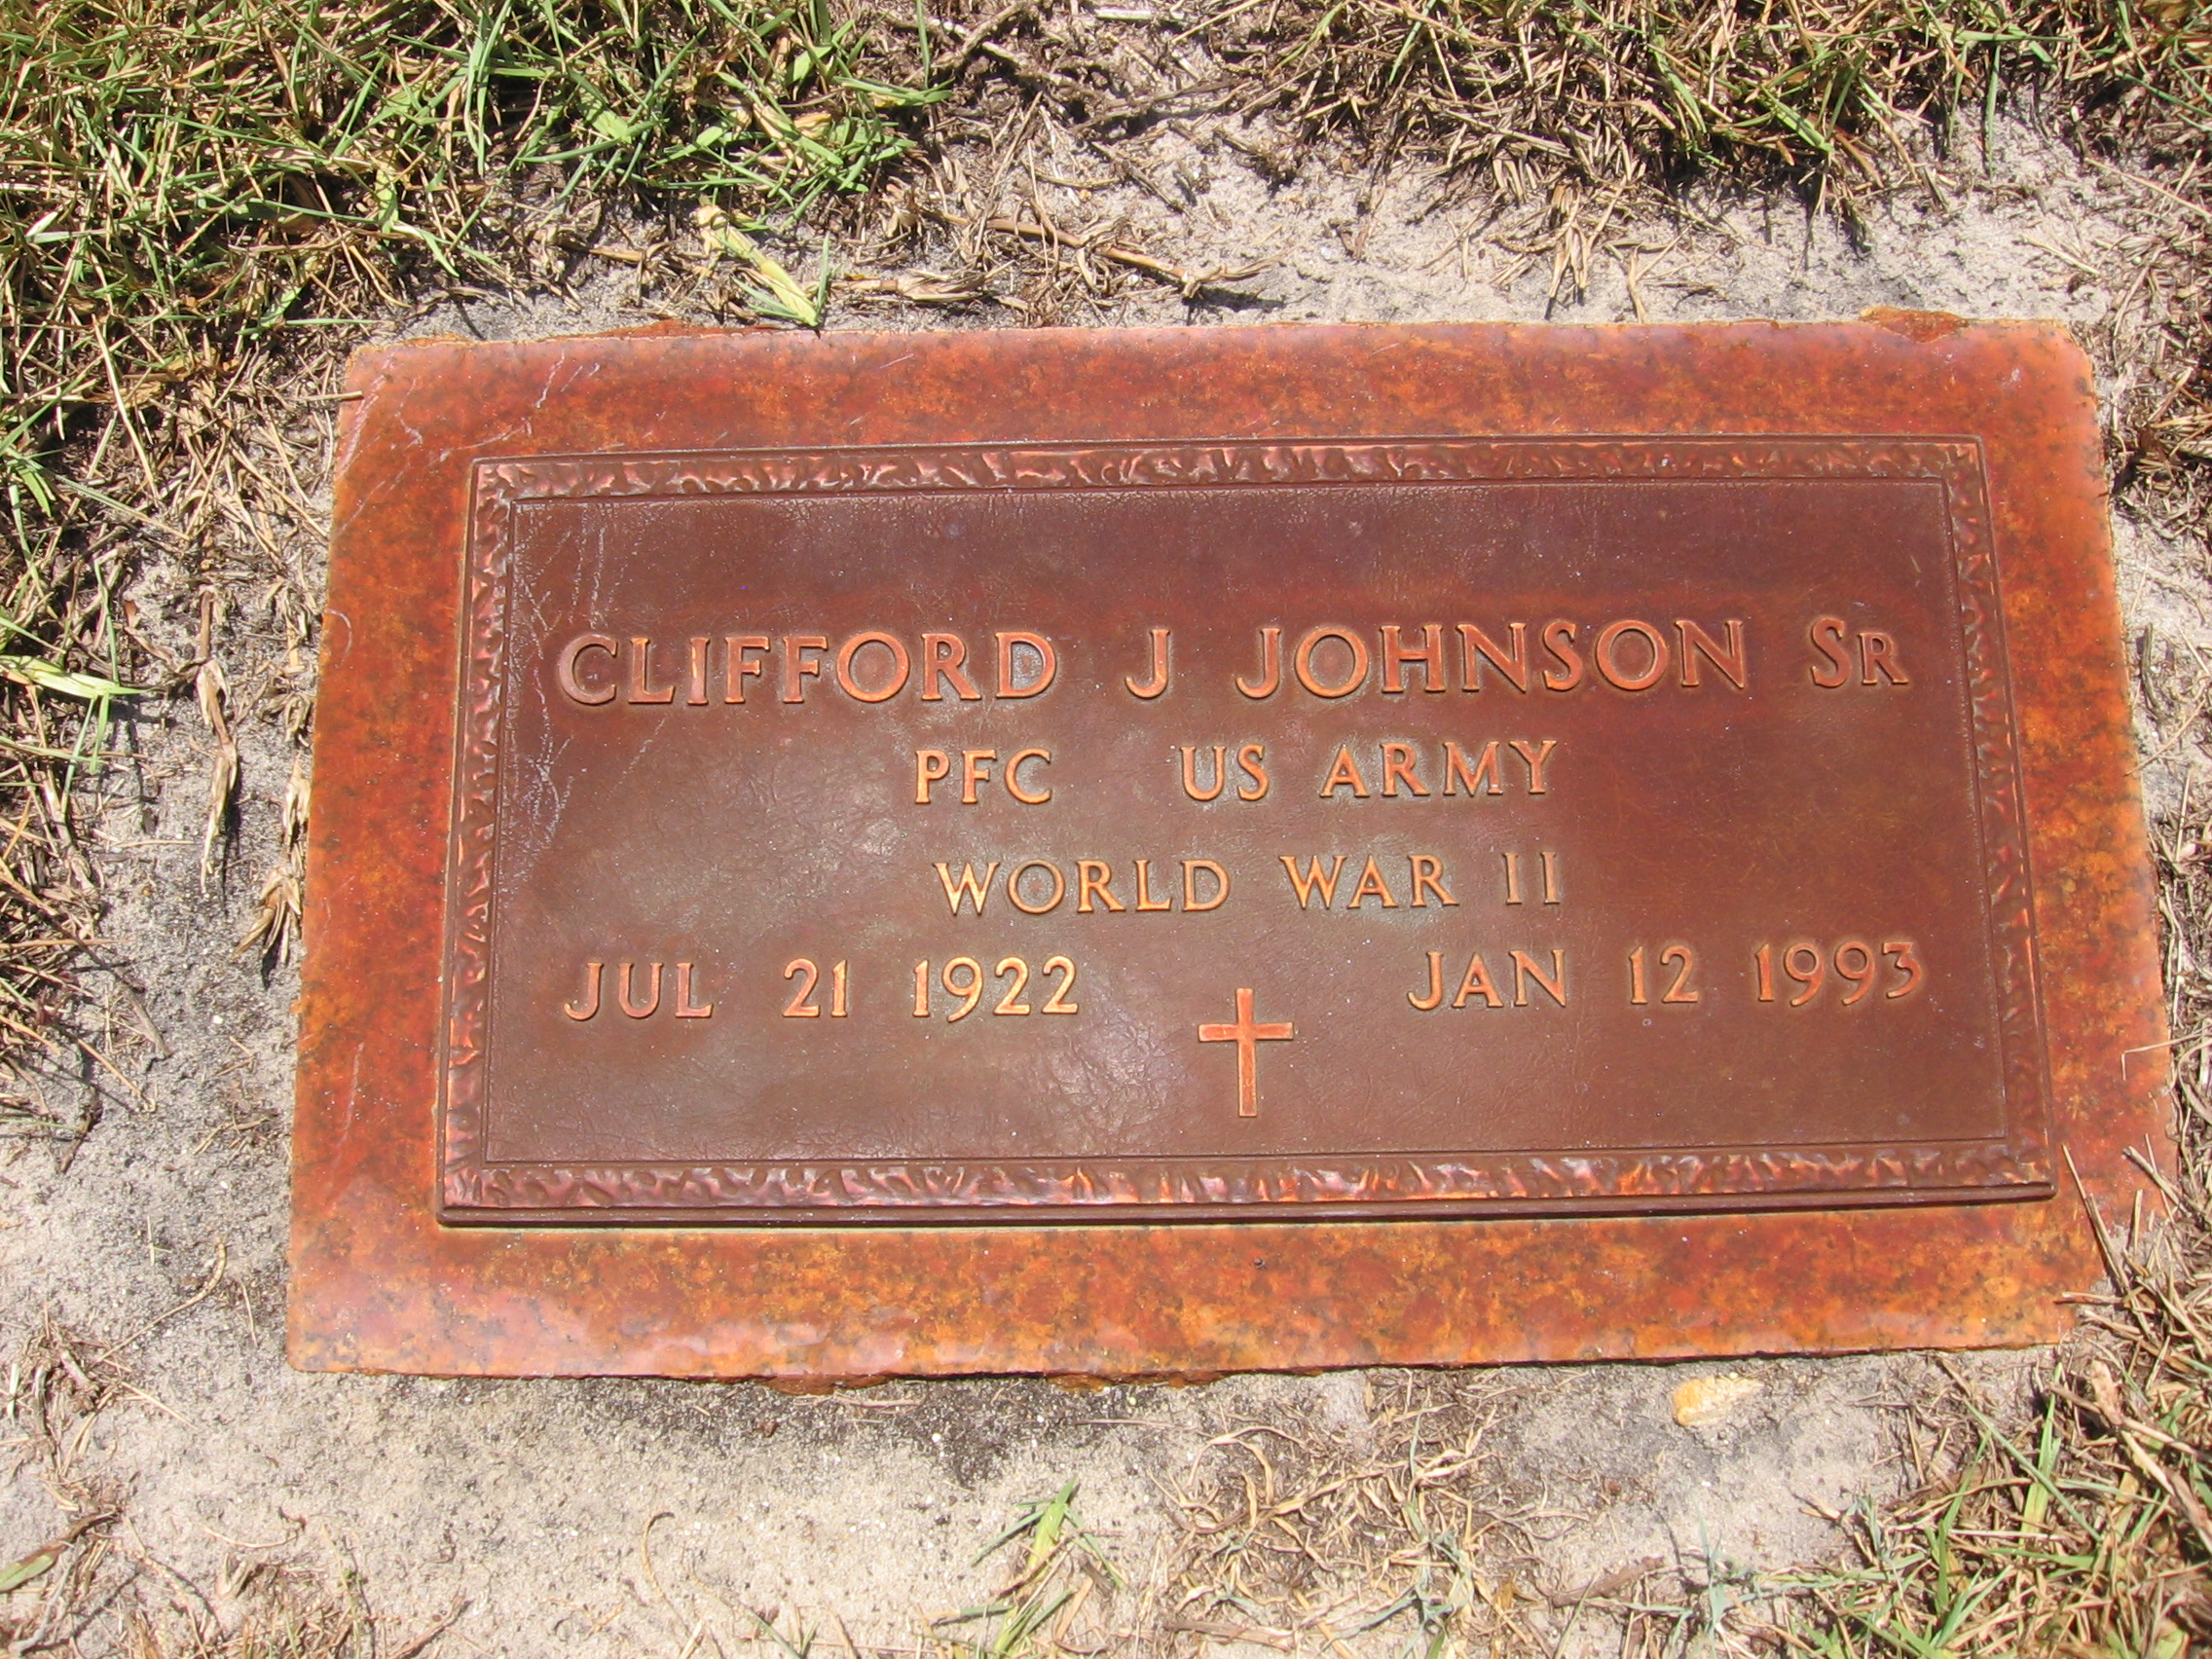 PFC Clifford J Johnson, Sr